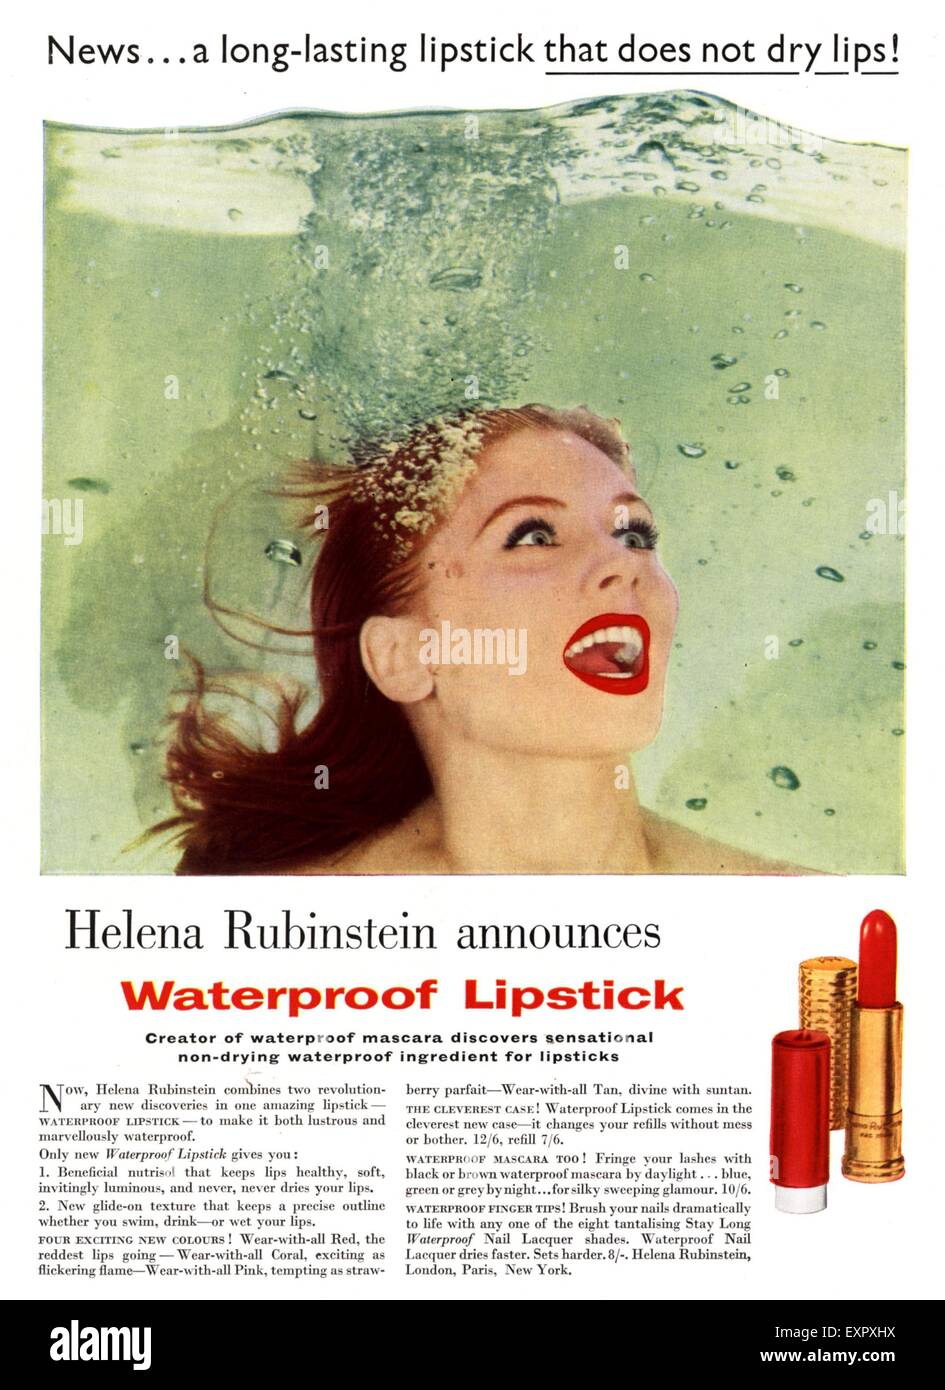 1950s UK Helena Rubinstein Magazine Advert Stock Photo - Alamy